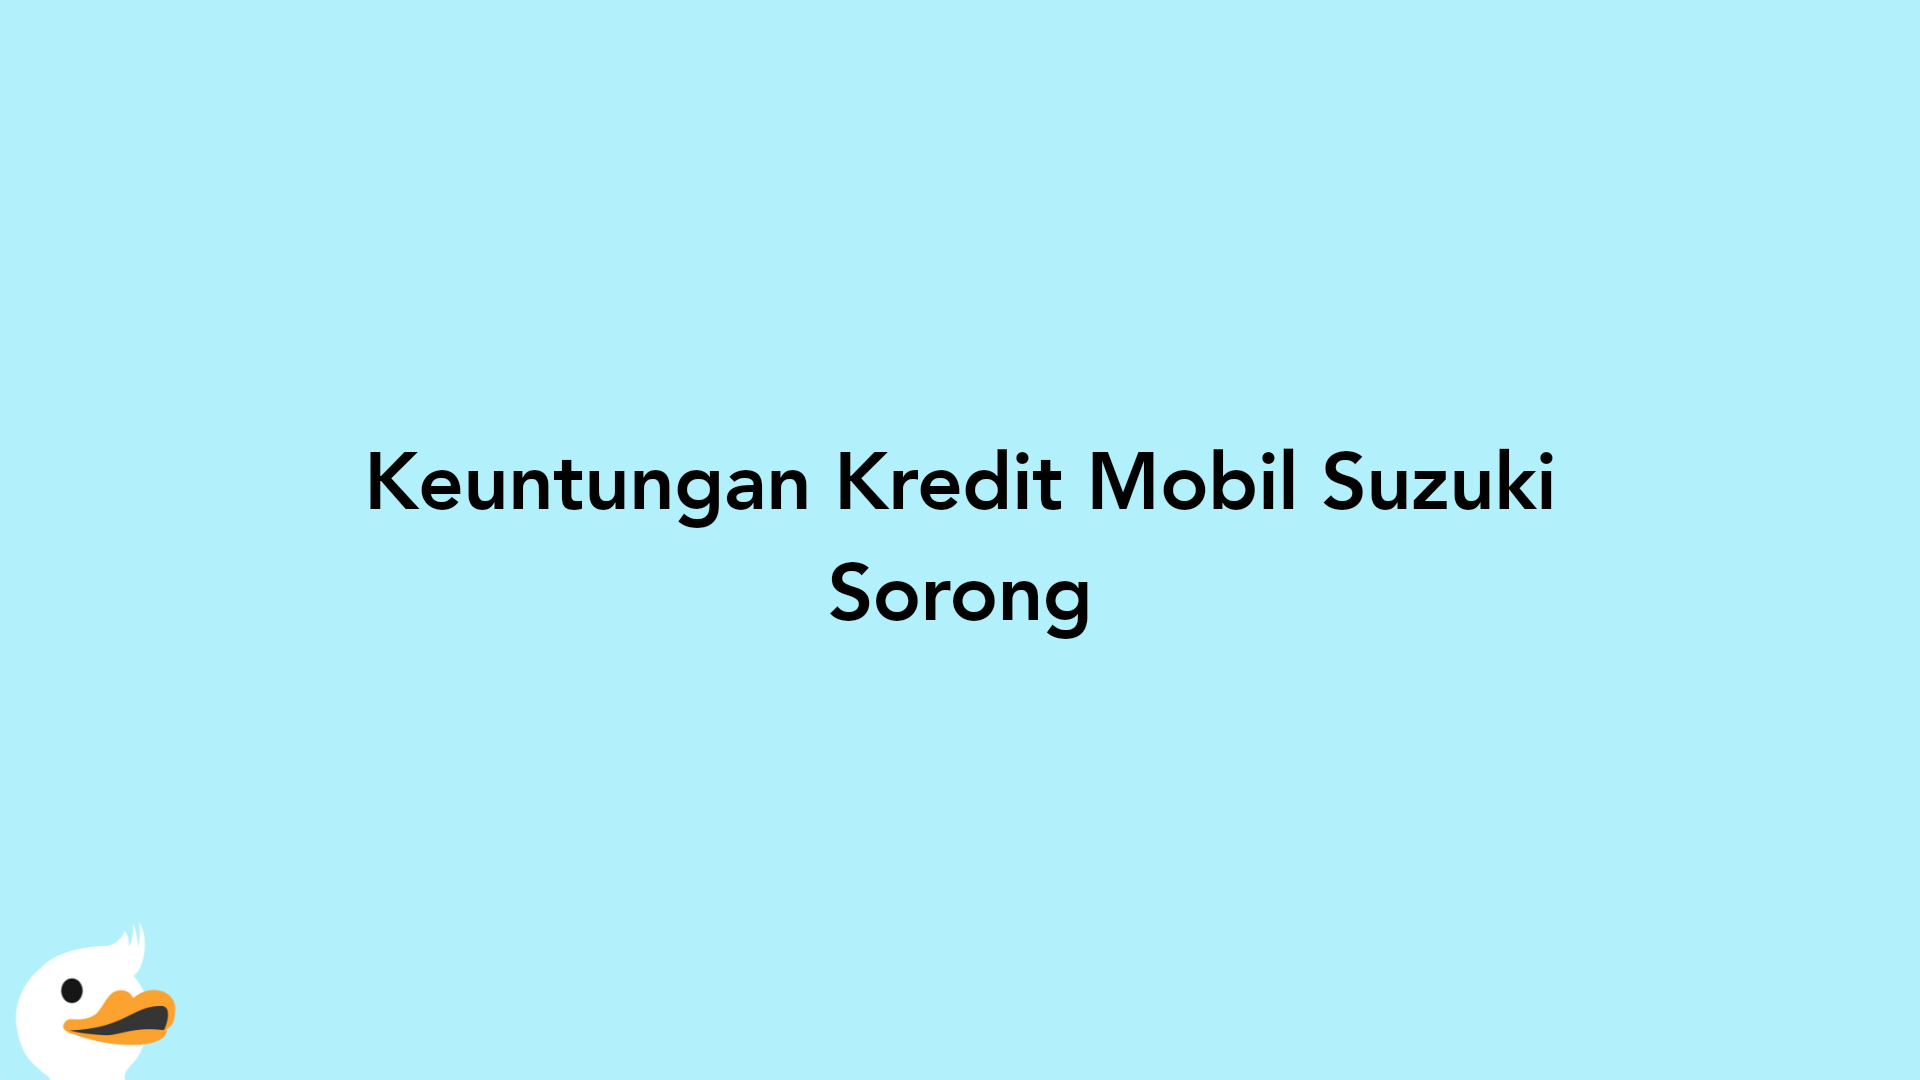 Keuntungan Kredit Mobil Suzuki Sorong